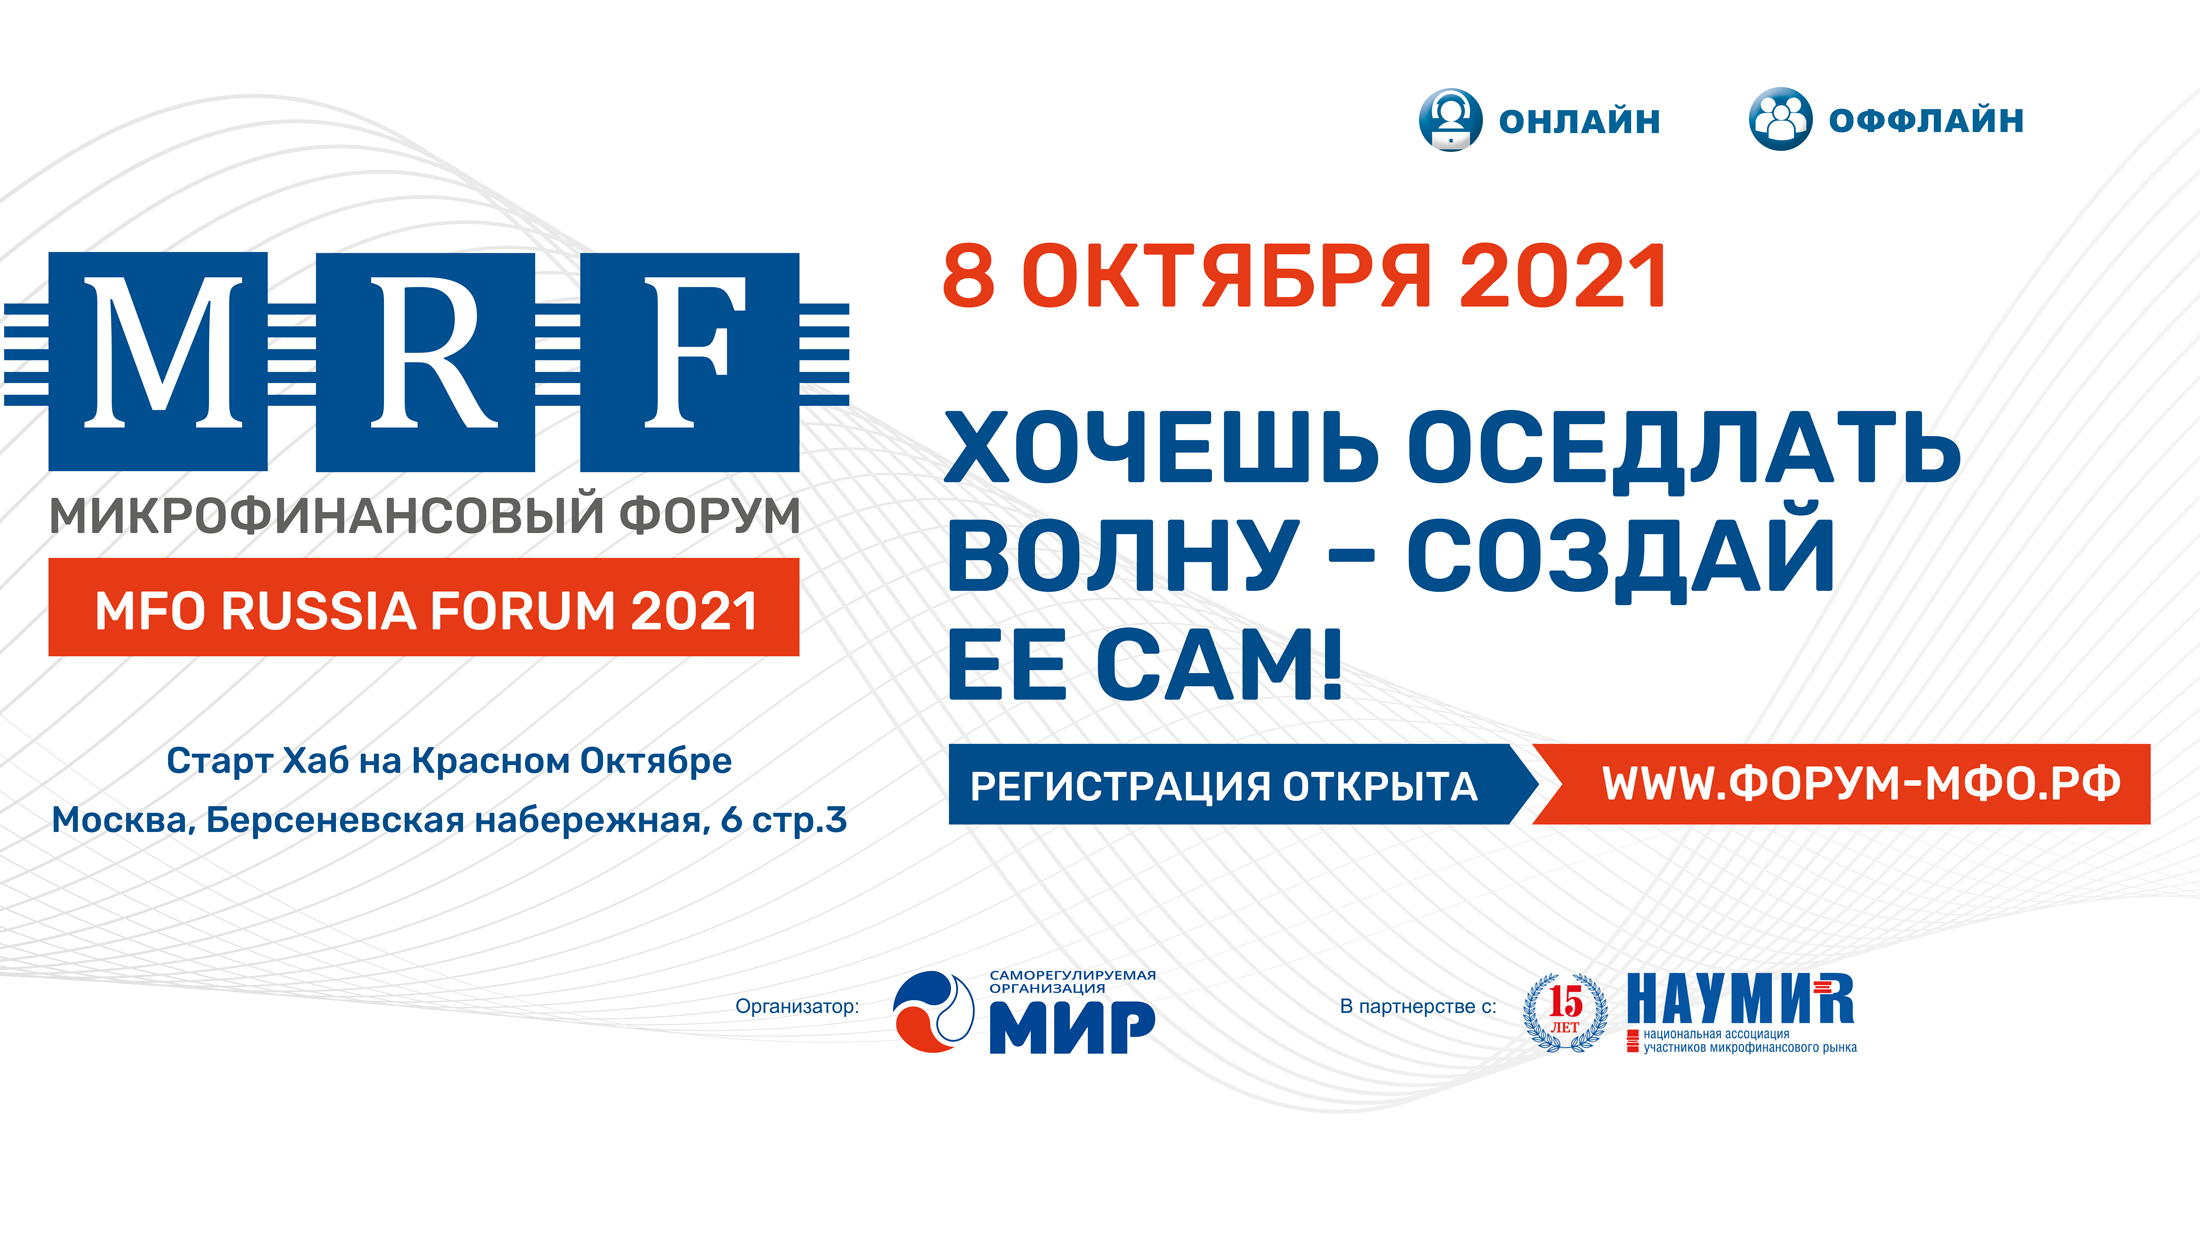 MFO Russia Forum